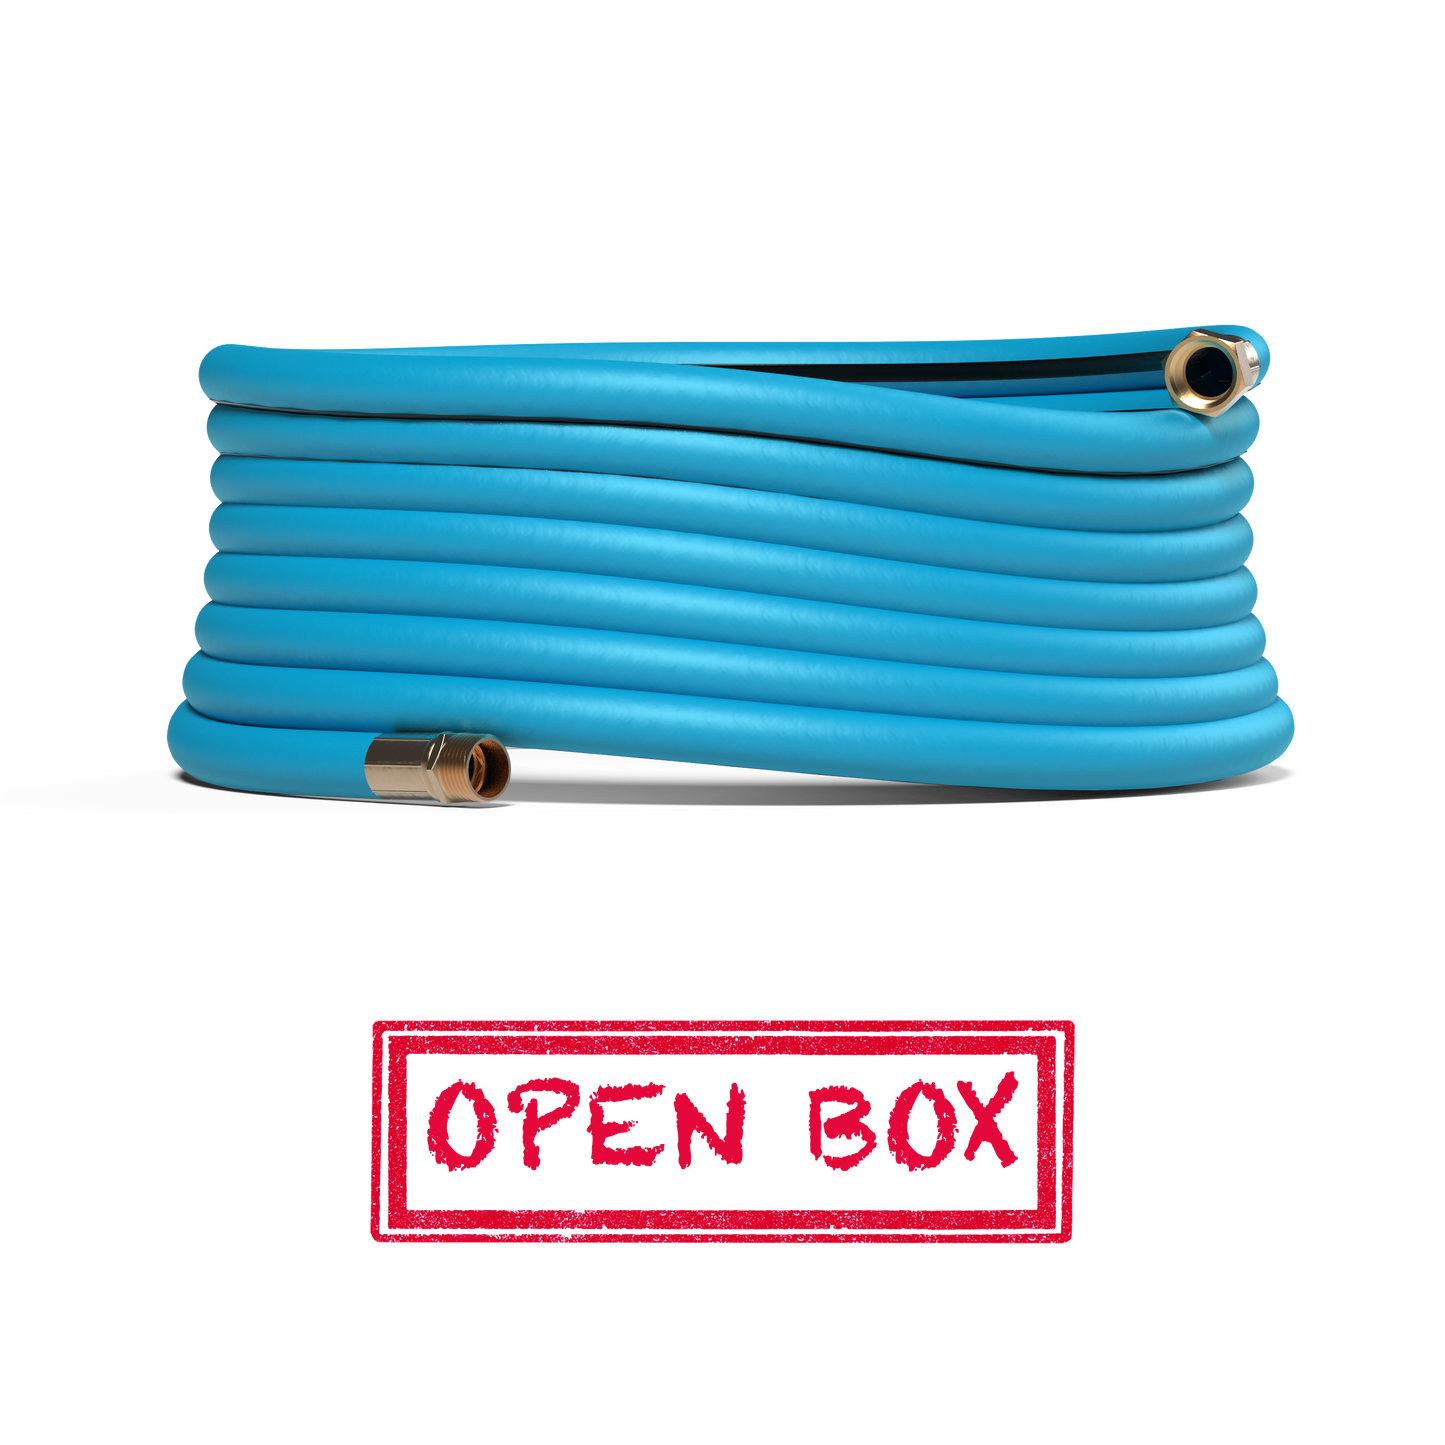 OPEN BOX- THE HOSE: By Aeromixer